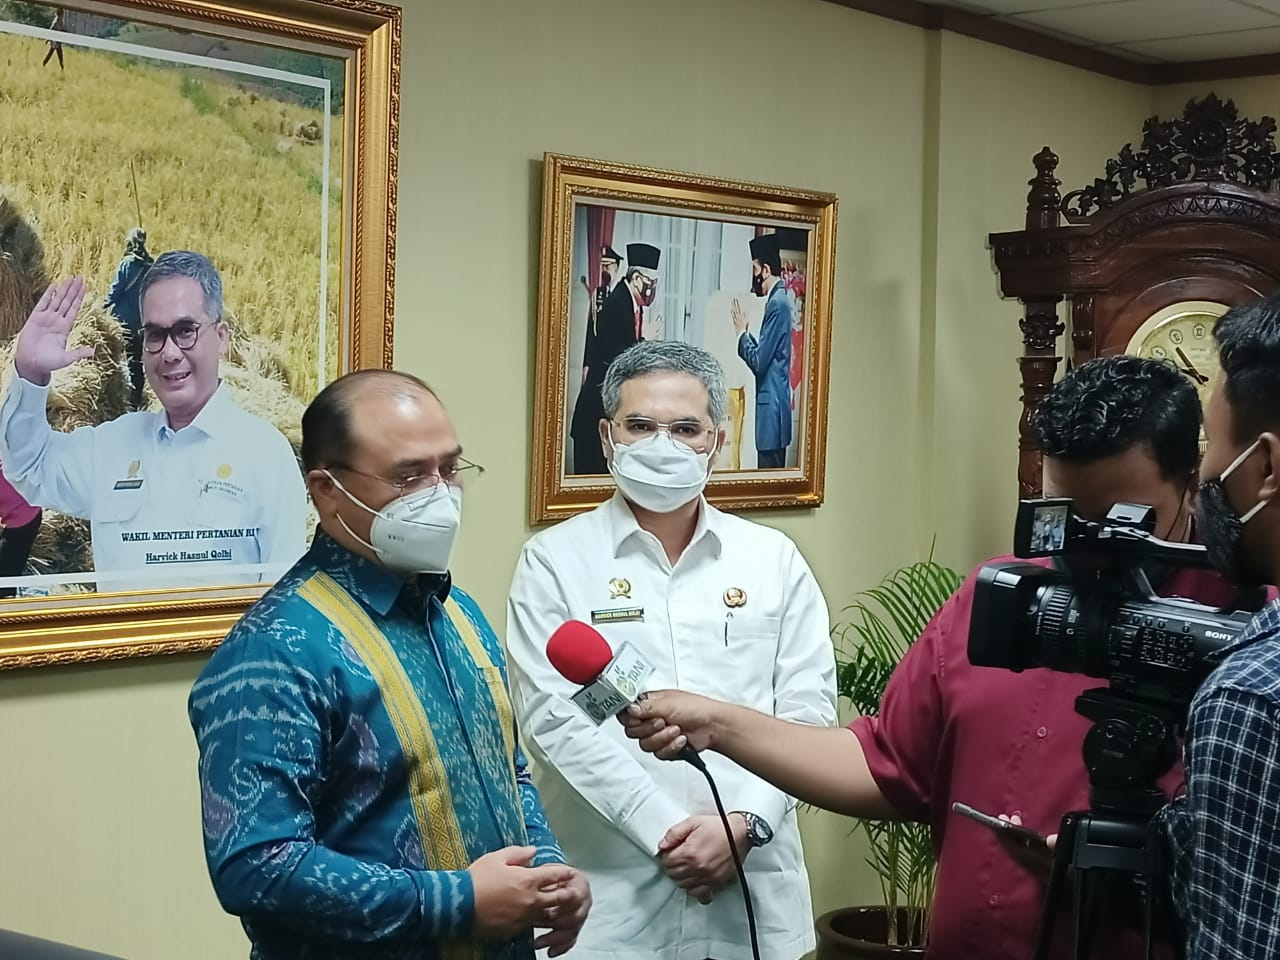 Wakil Menteri Pertanian (Wamentan), Harvick Hasnul Qolbi (kanan) saat menerima kunjungan Gubernur Bangka Belitung, Erzaldi Rosman (kiri) di gedung Kementerina Pertanian, Jakarta, Senin (28/6).